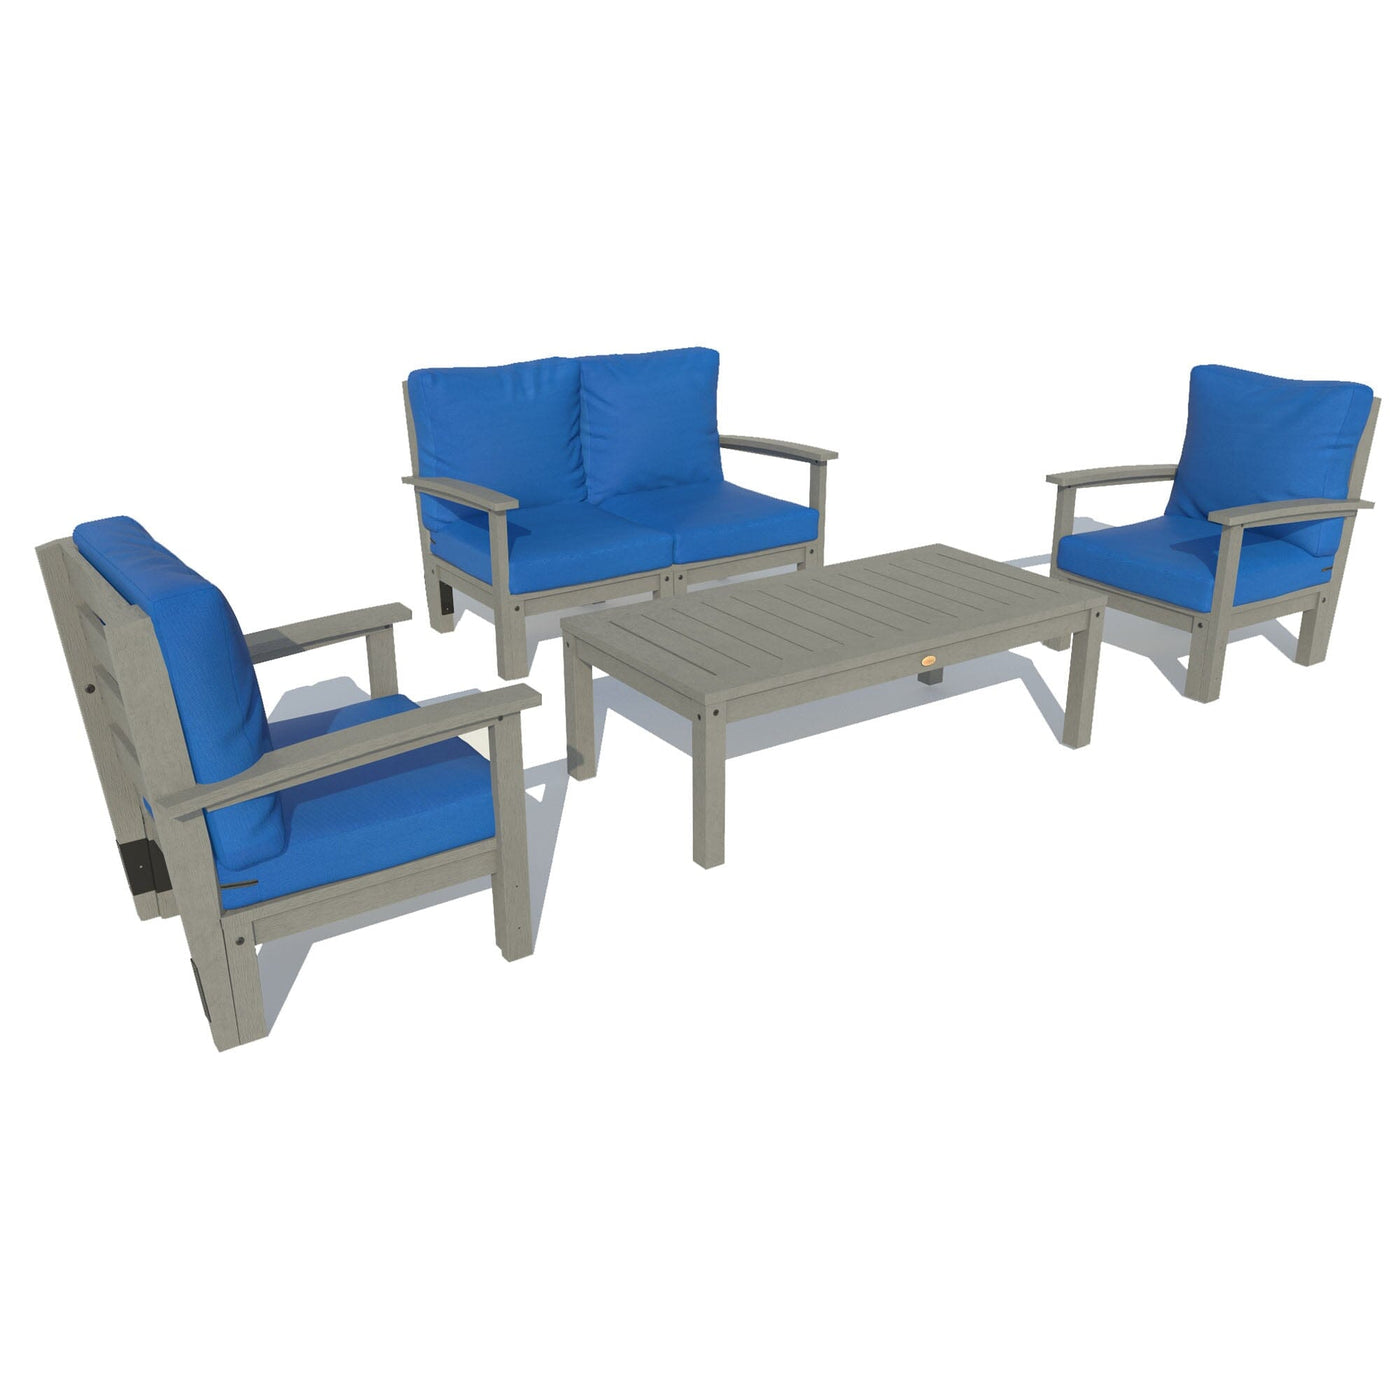 Bespoke Deep Seating: Loveseat, 2 Chair Set, and Conversation Table Deep Seating Highwood USA Cobalt Blue Coastal Teak 